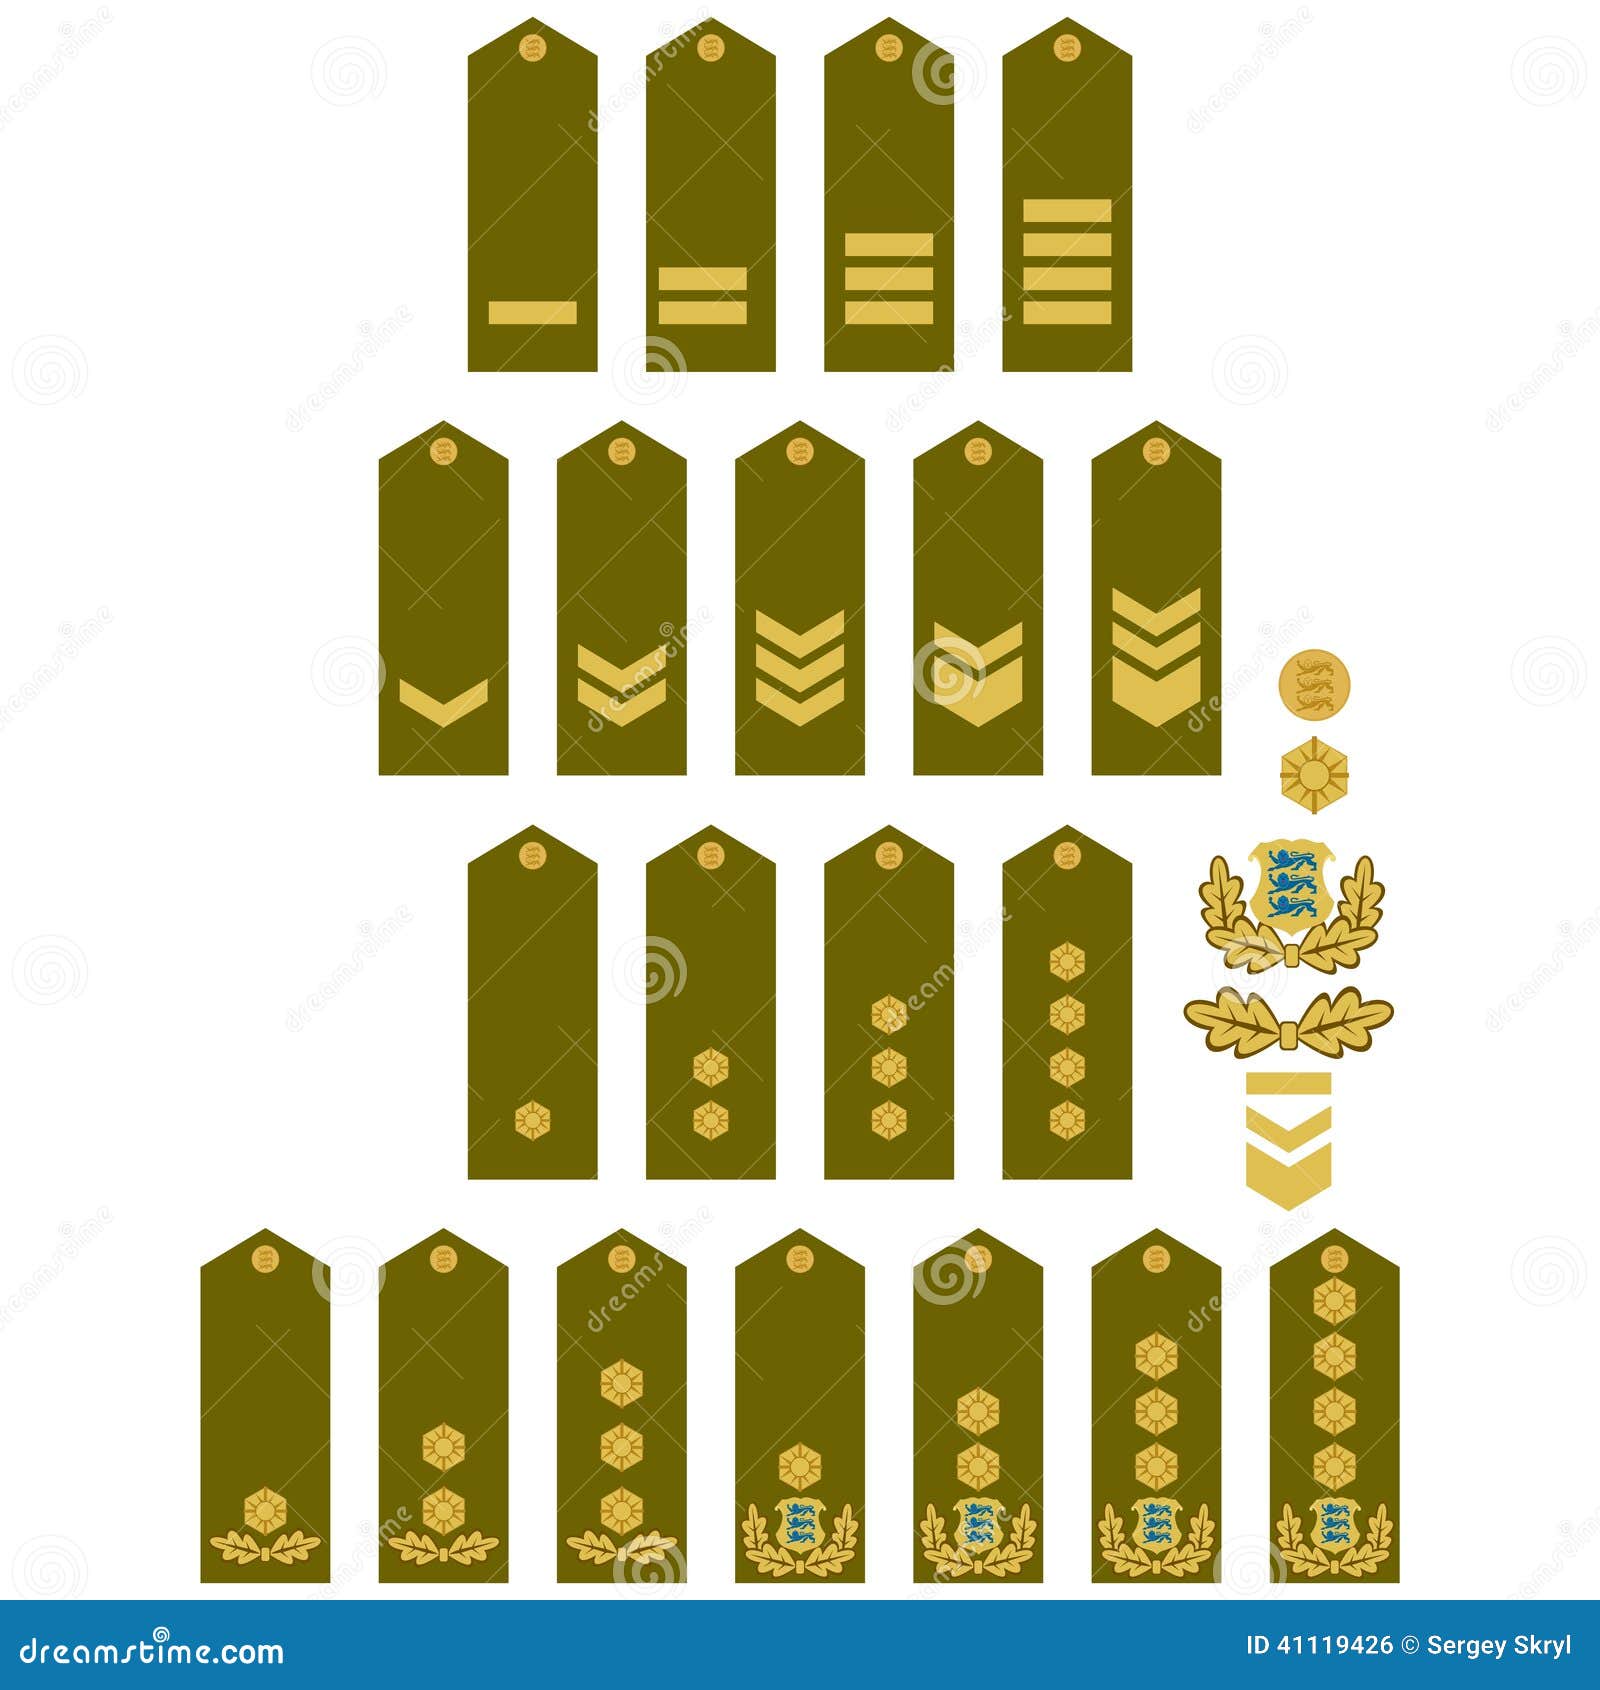 military clipart army rank - photo #47